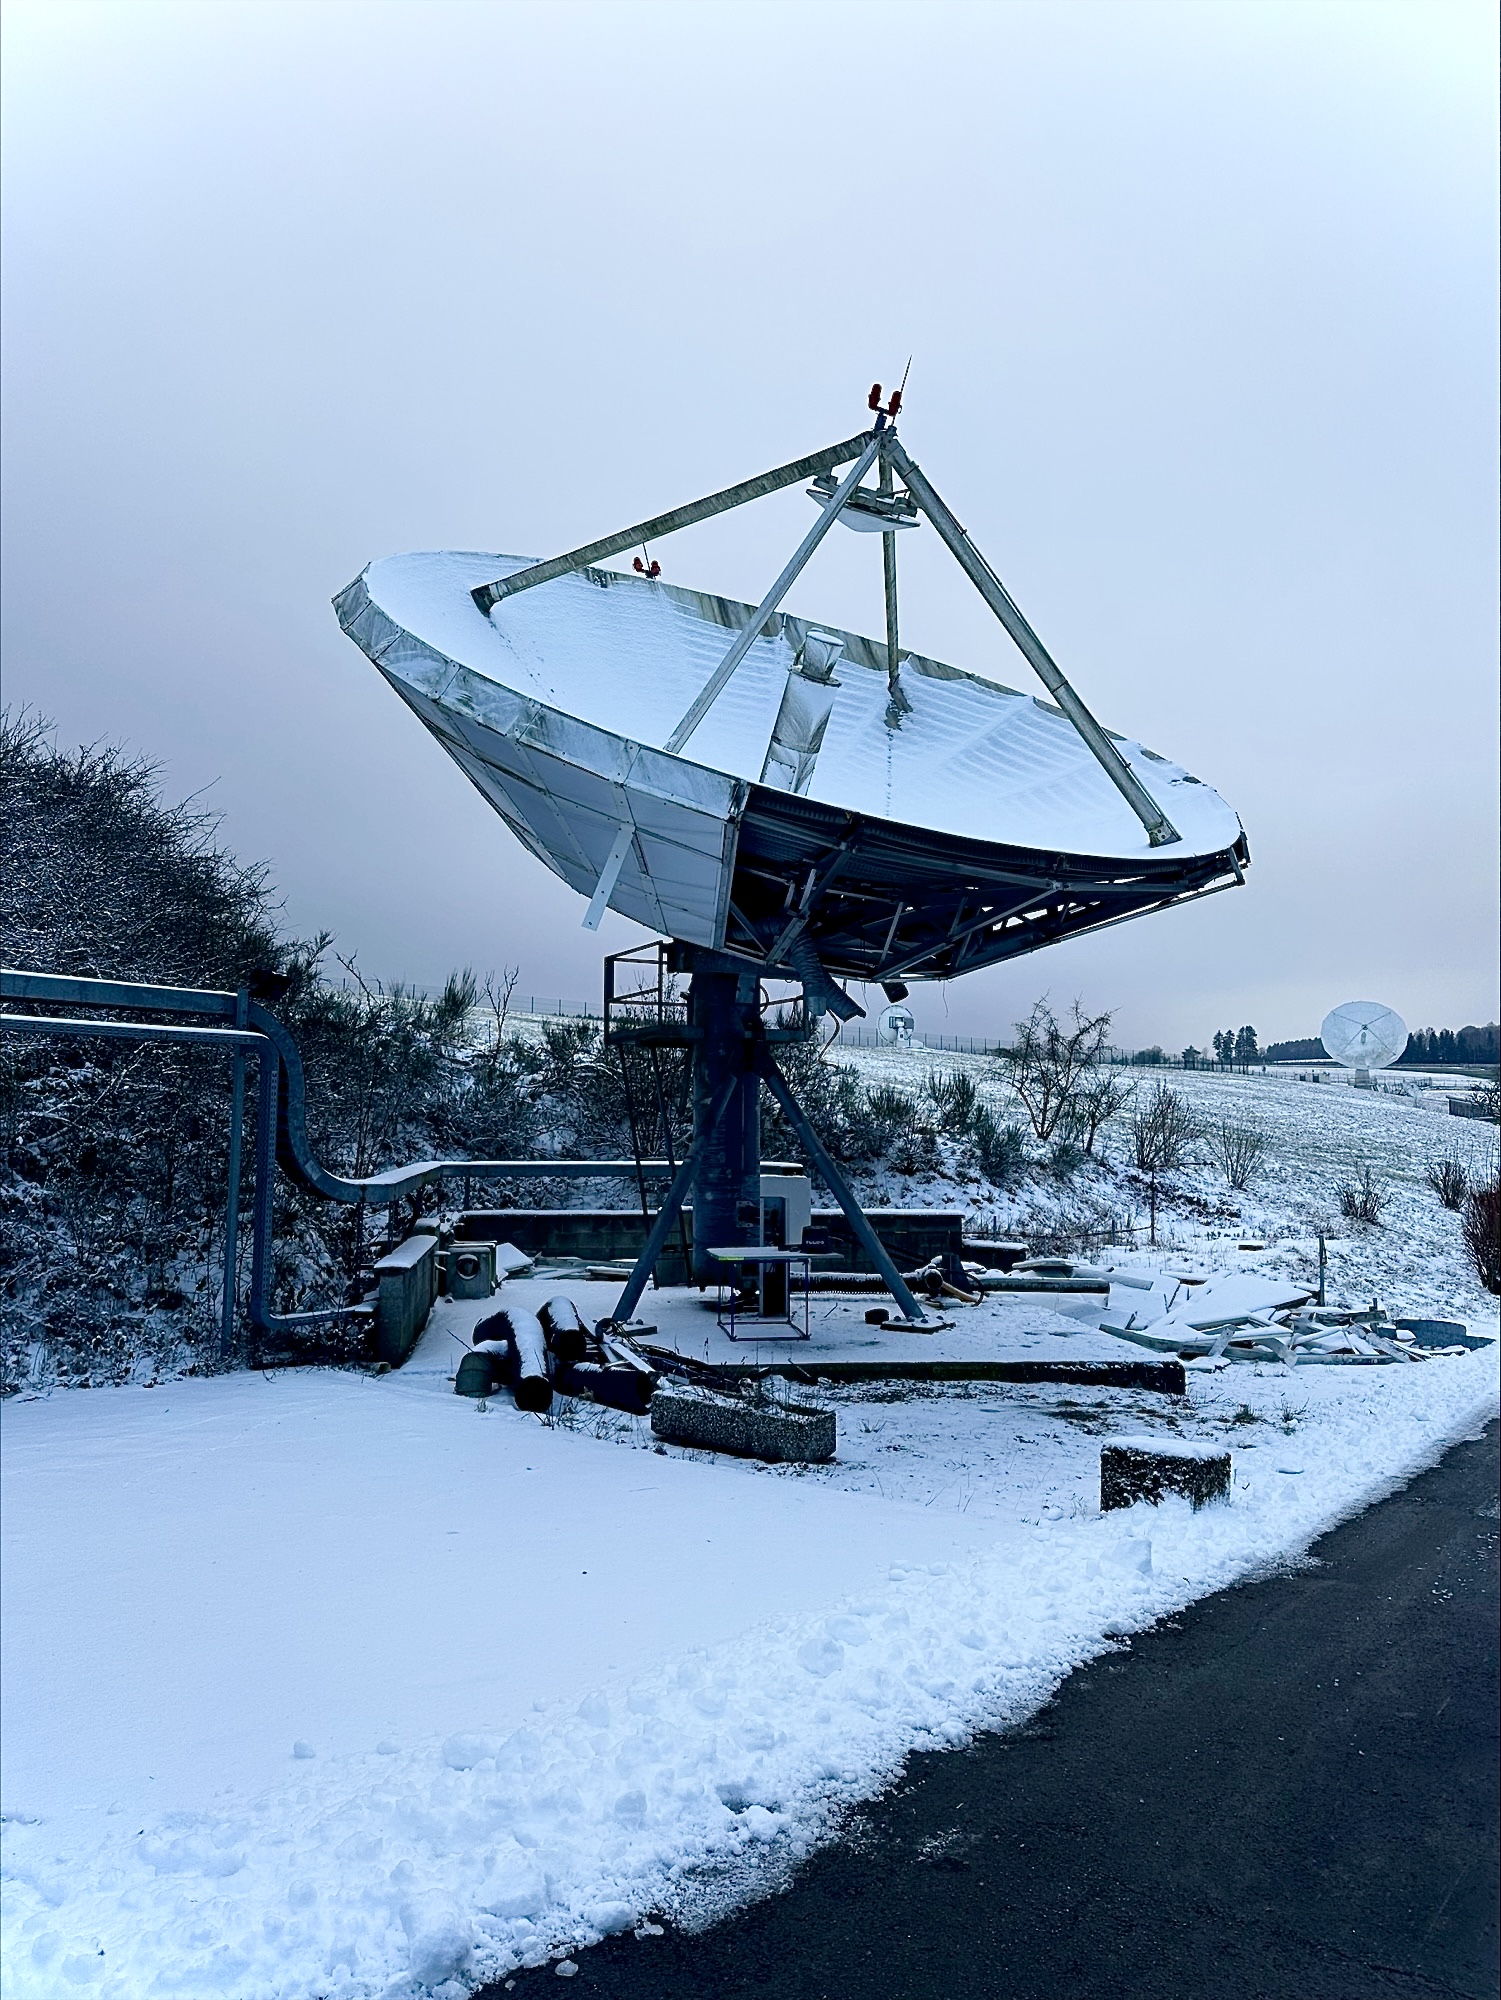 VertexRSI 9m Earth Station Antenna de-installed